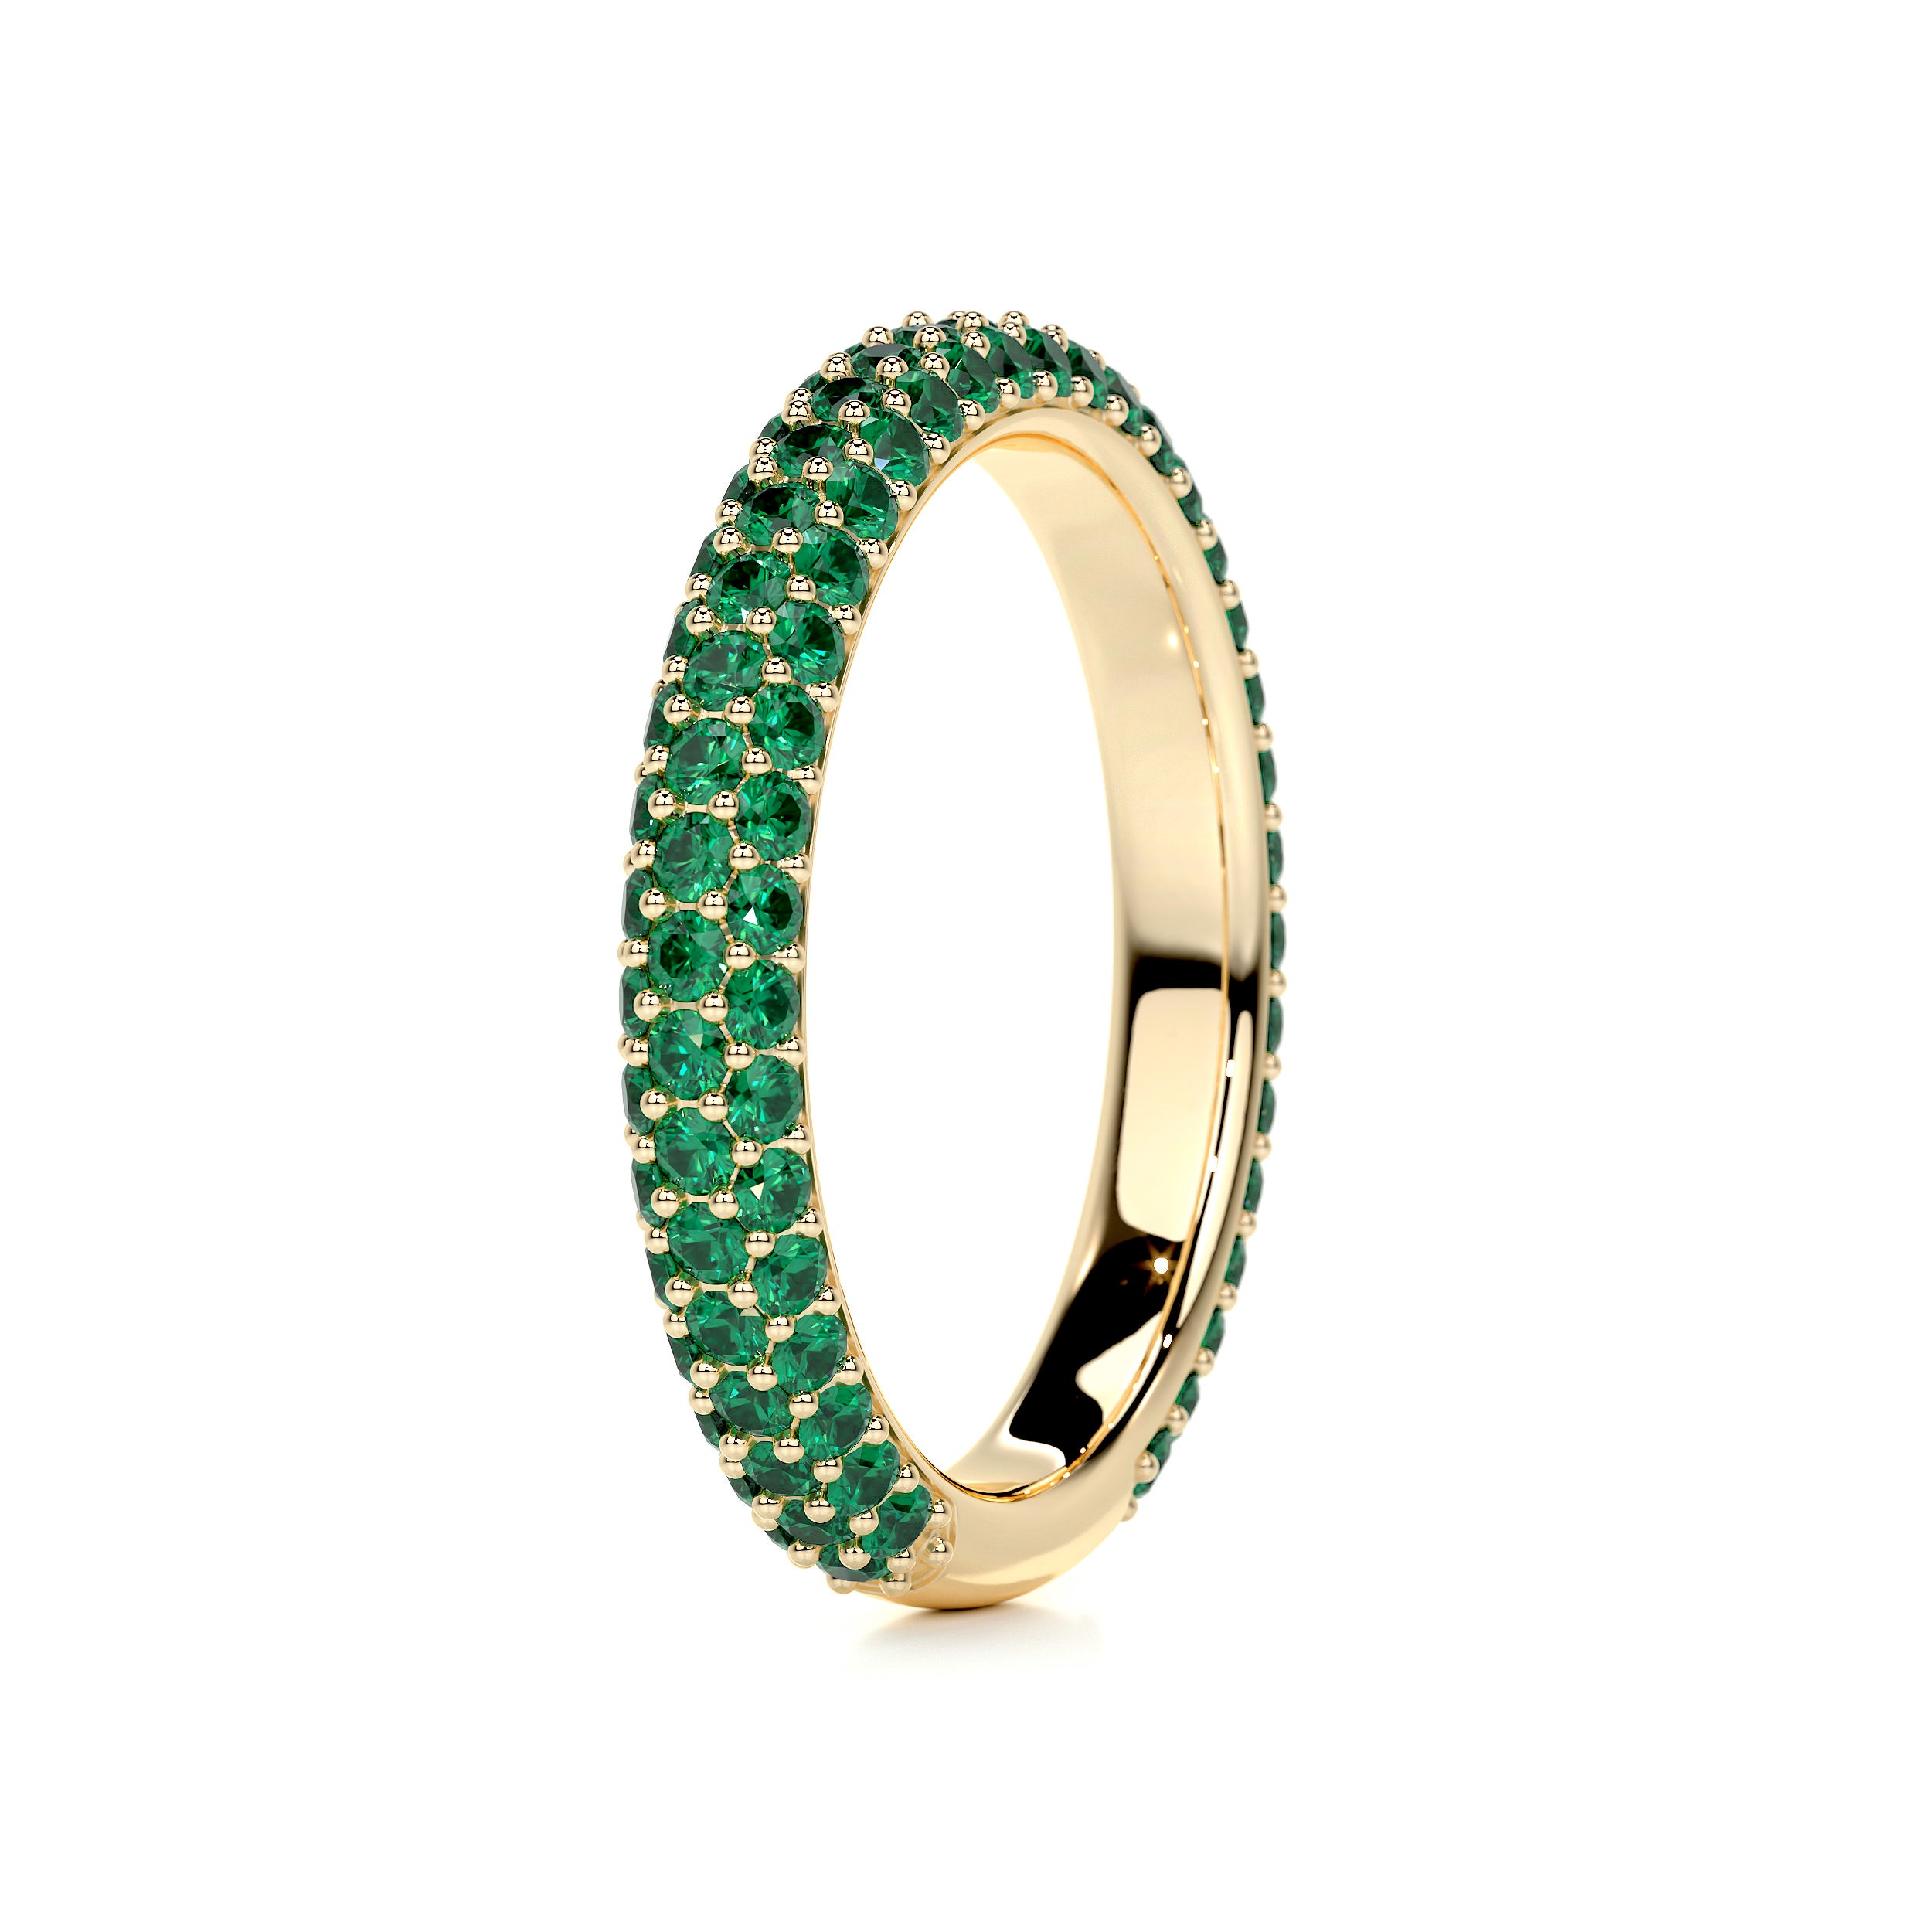 Emma Green Gemstone Wedding Ring   (1.25 Carat) - 18K Yellow Gold